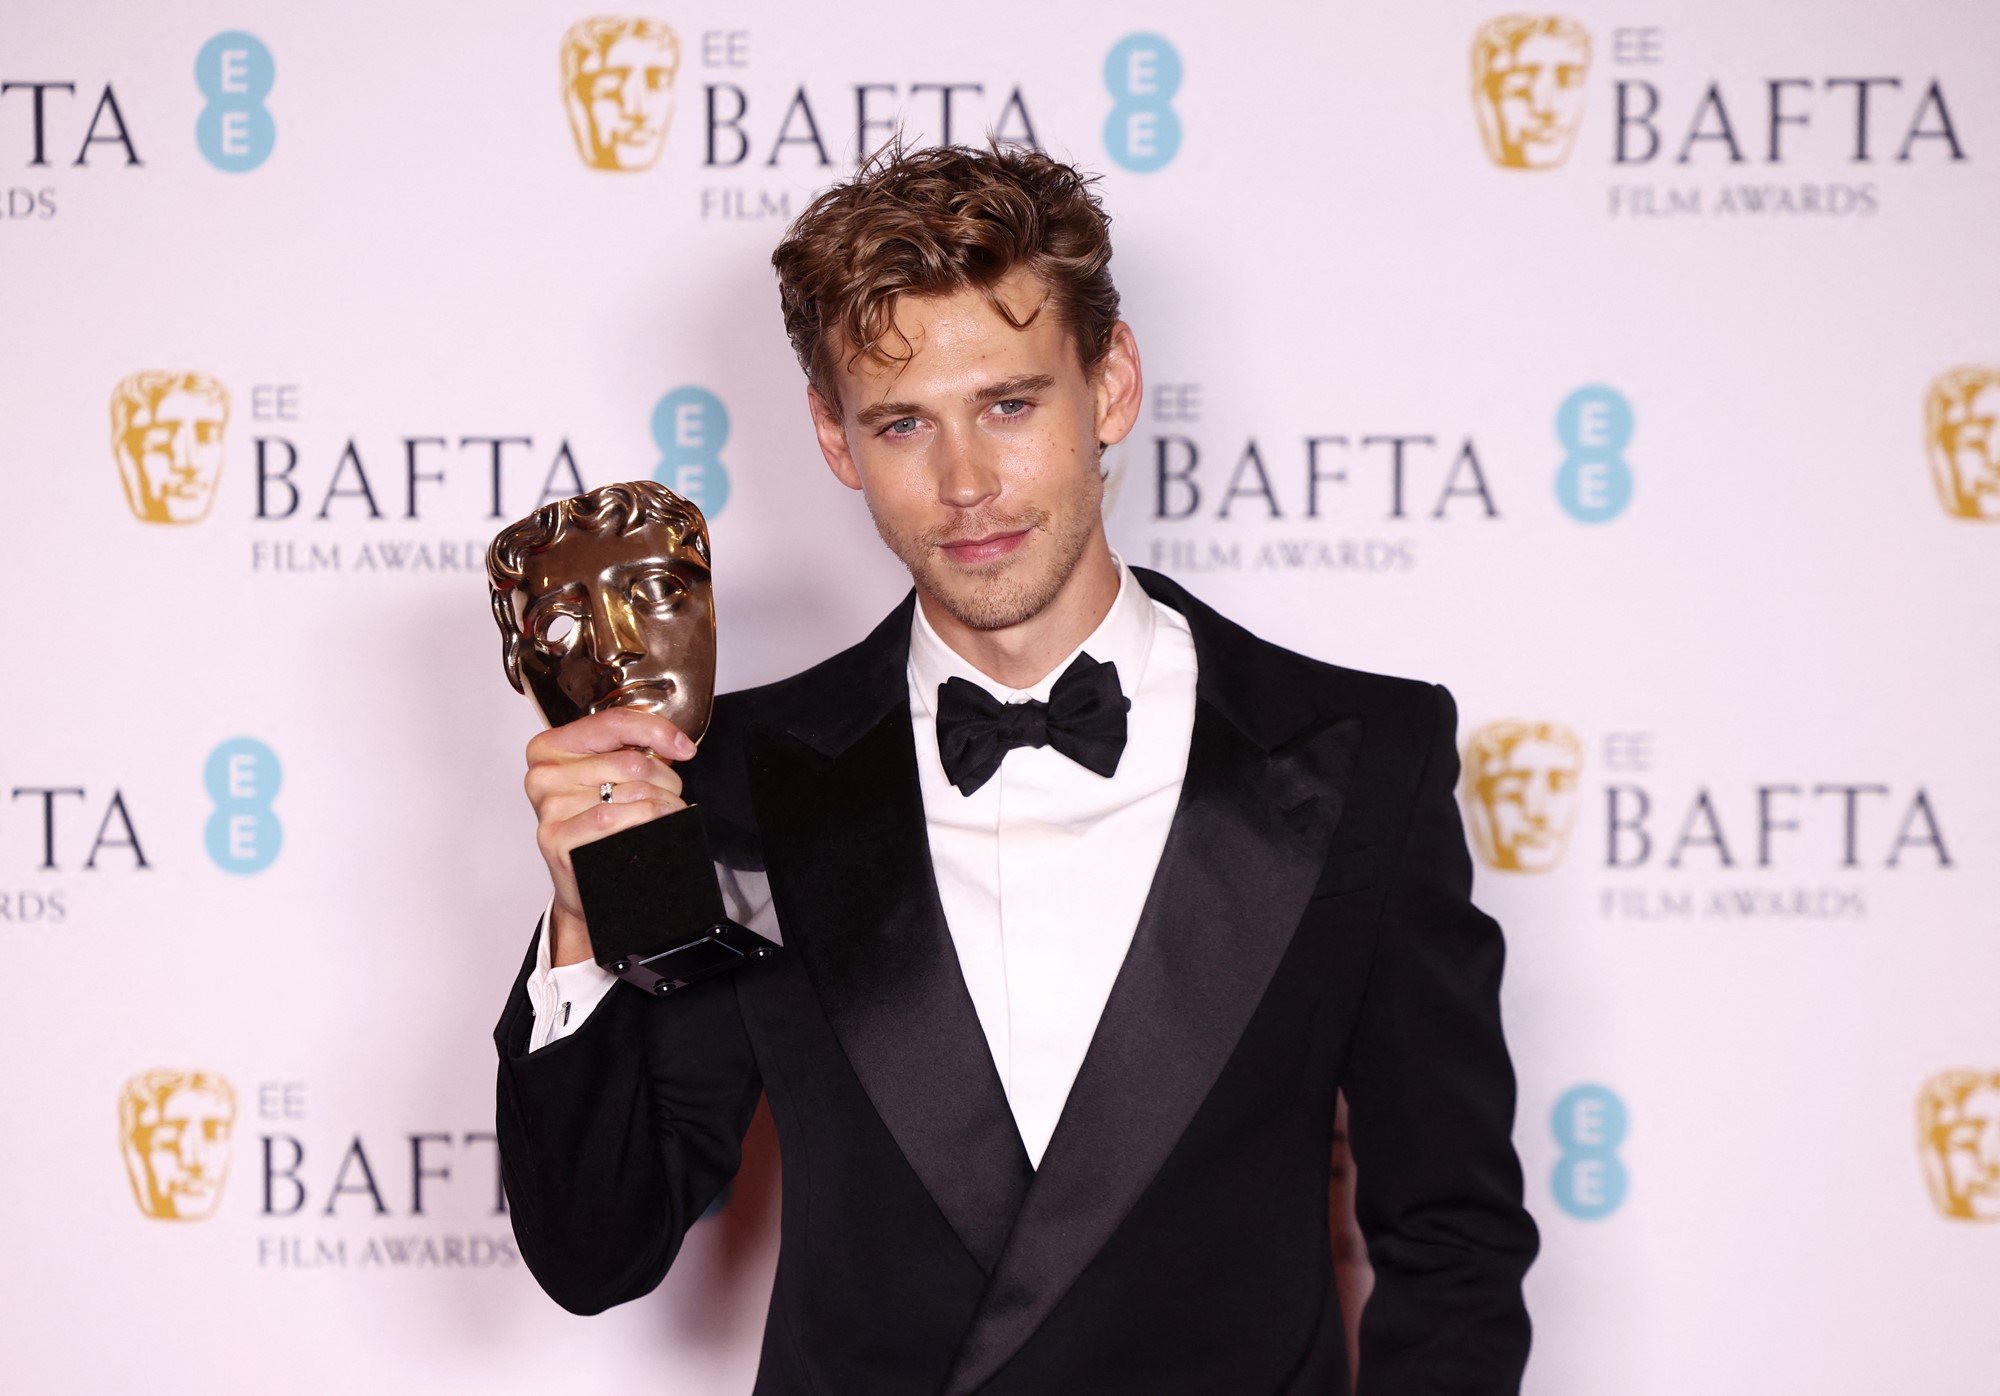 Austin Bulter poses with his BAFTA Award